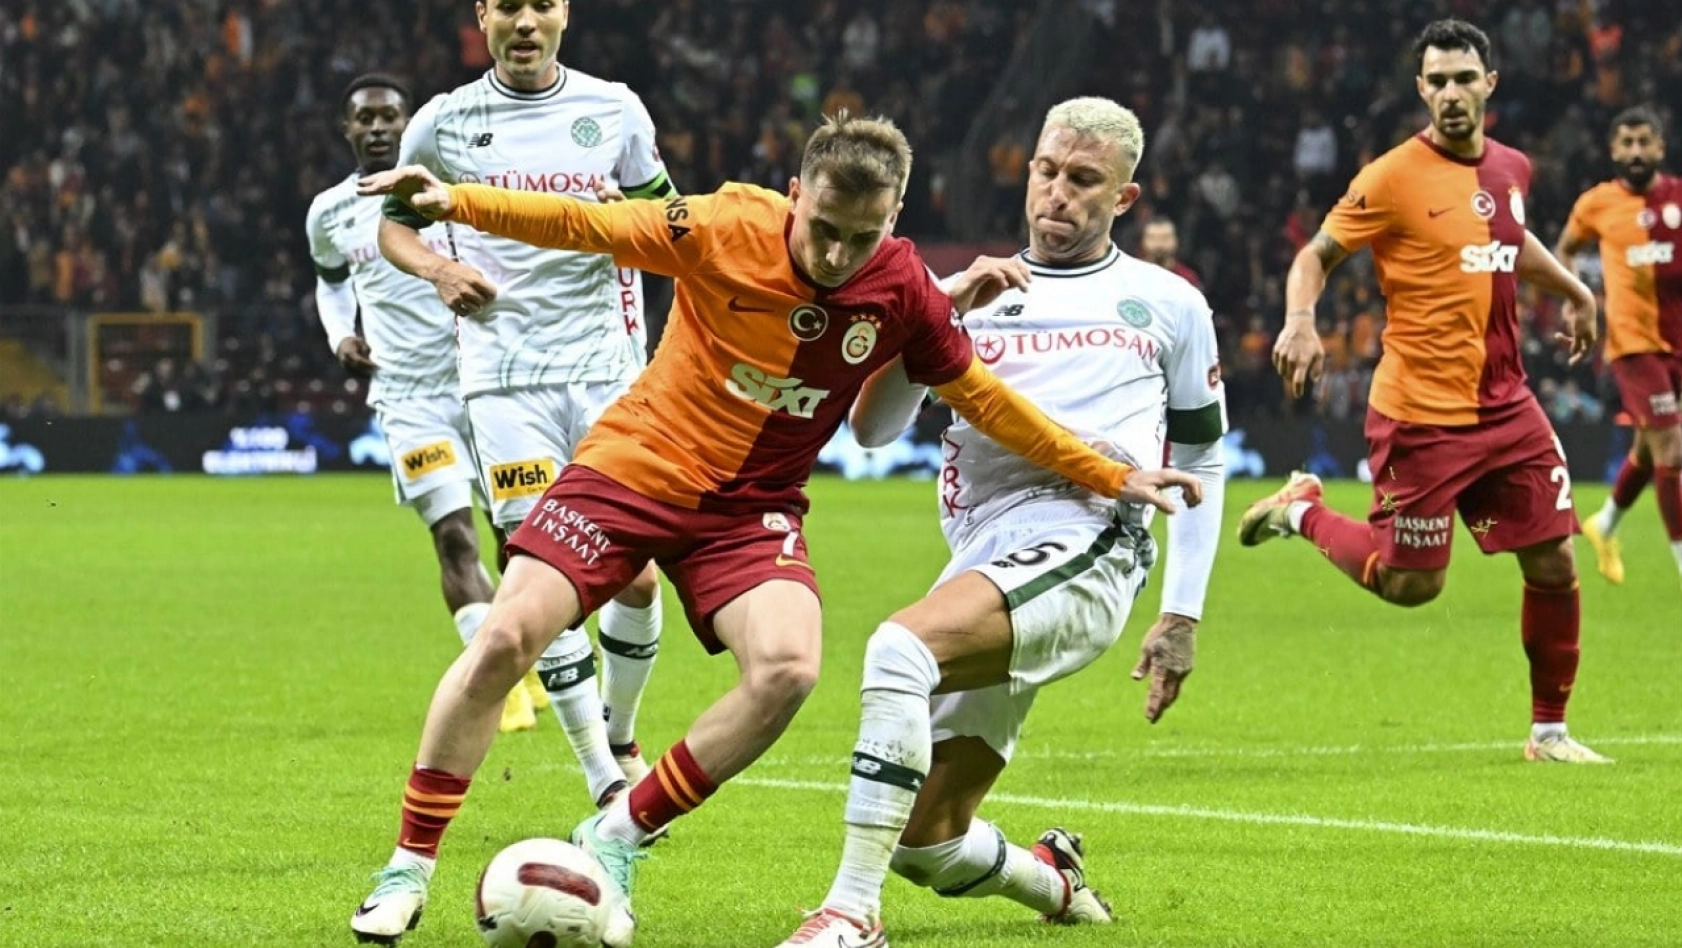 Galatasaray, Tümosan Konyaspor karşısında rövanşı aldı: 3-0